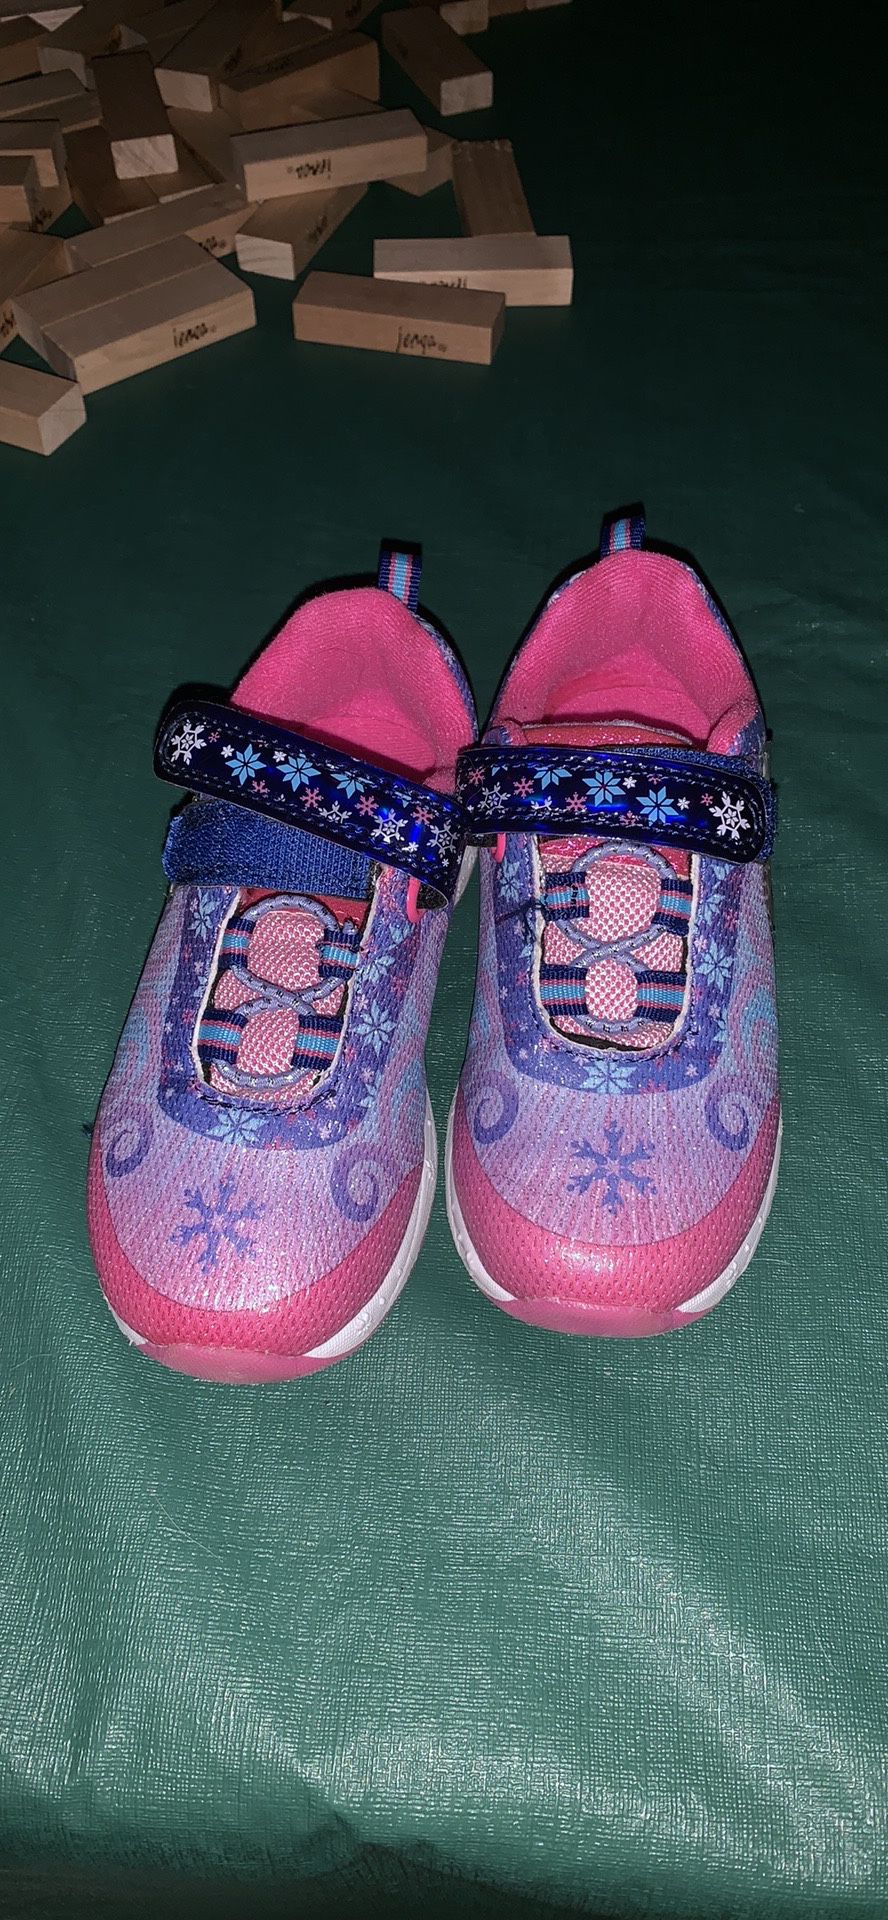 Disney Frozen Elsa Anna fashion sneakers shoes size 10